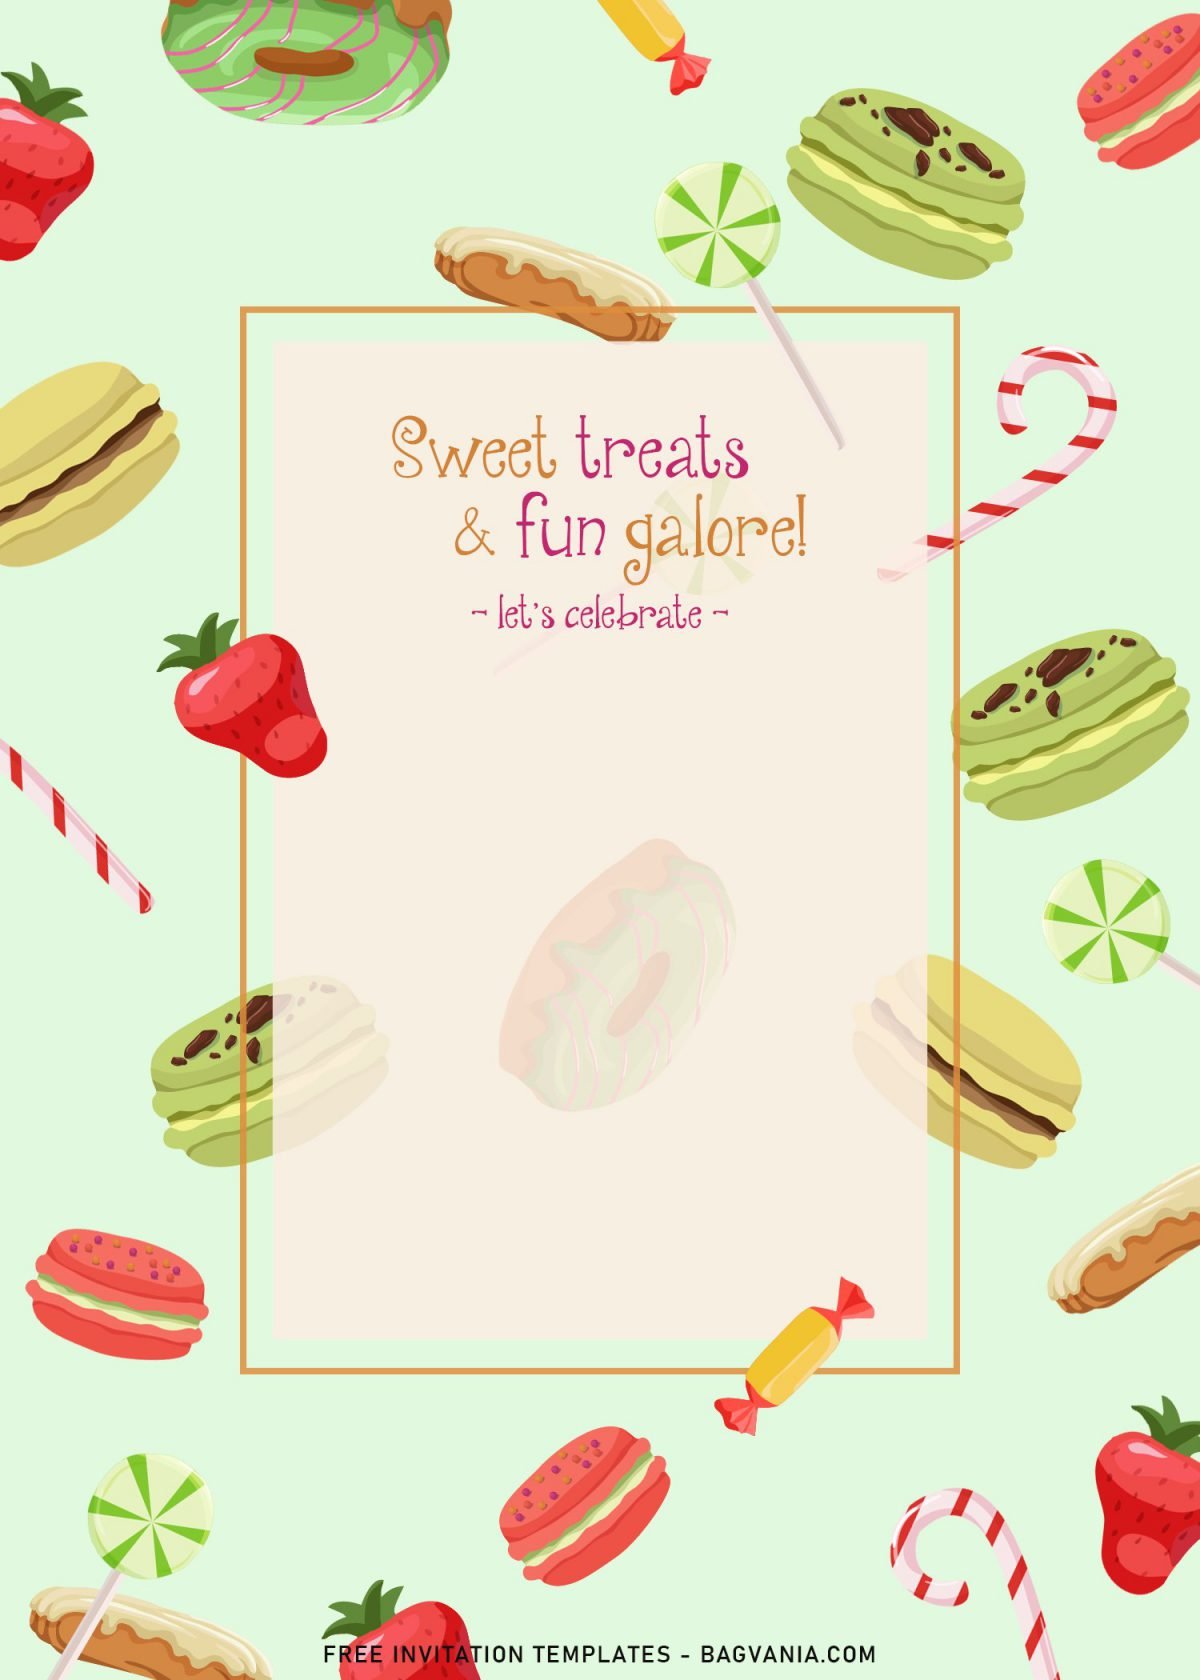 11+ Sweet Treats Fun Galore Birthday Invitation Templates and has sweet strawberry